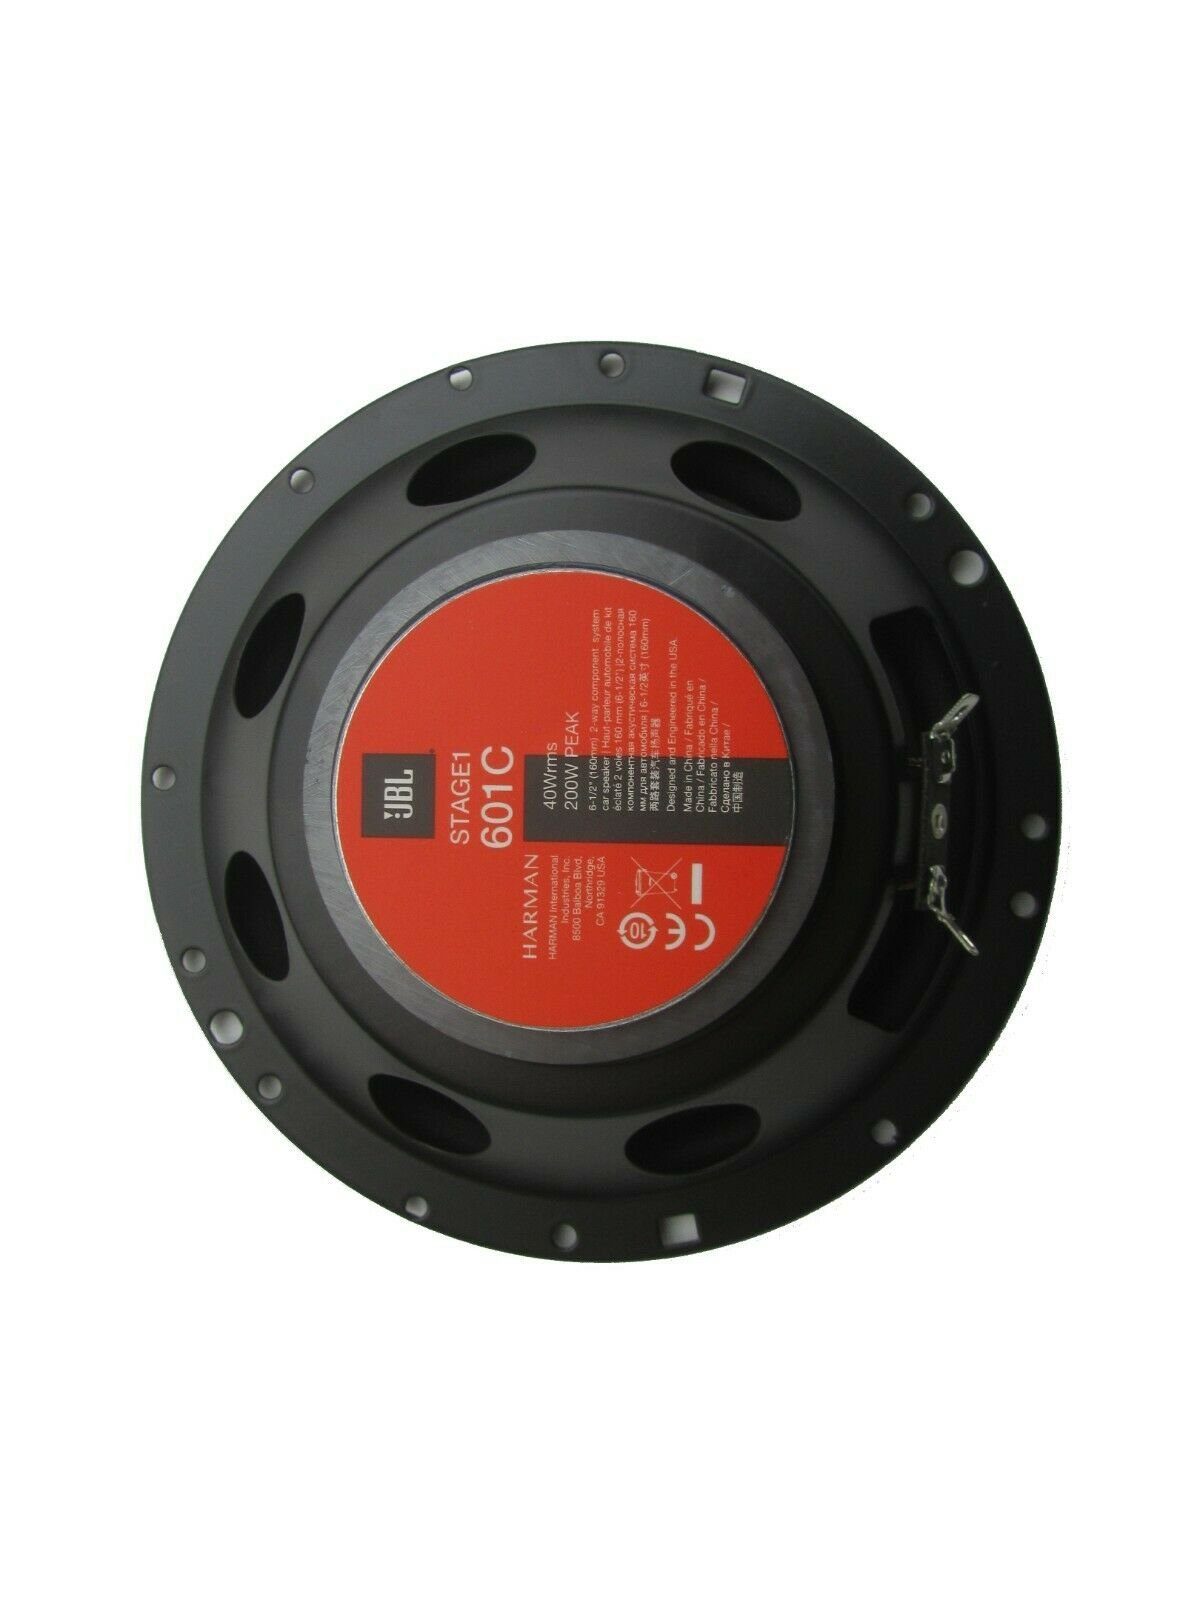 W) (40 Auto-Lautsprecher komponenten für JBL Wege Lautsprecher Skoda DSX 2 Fabi